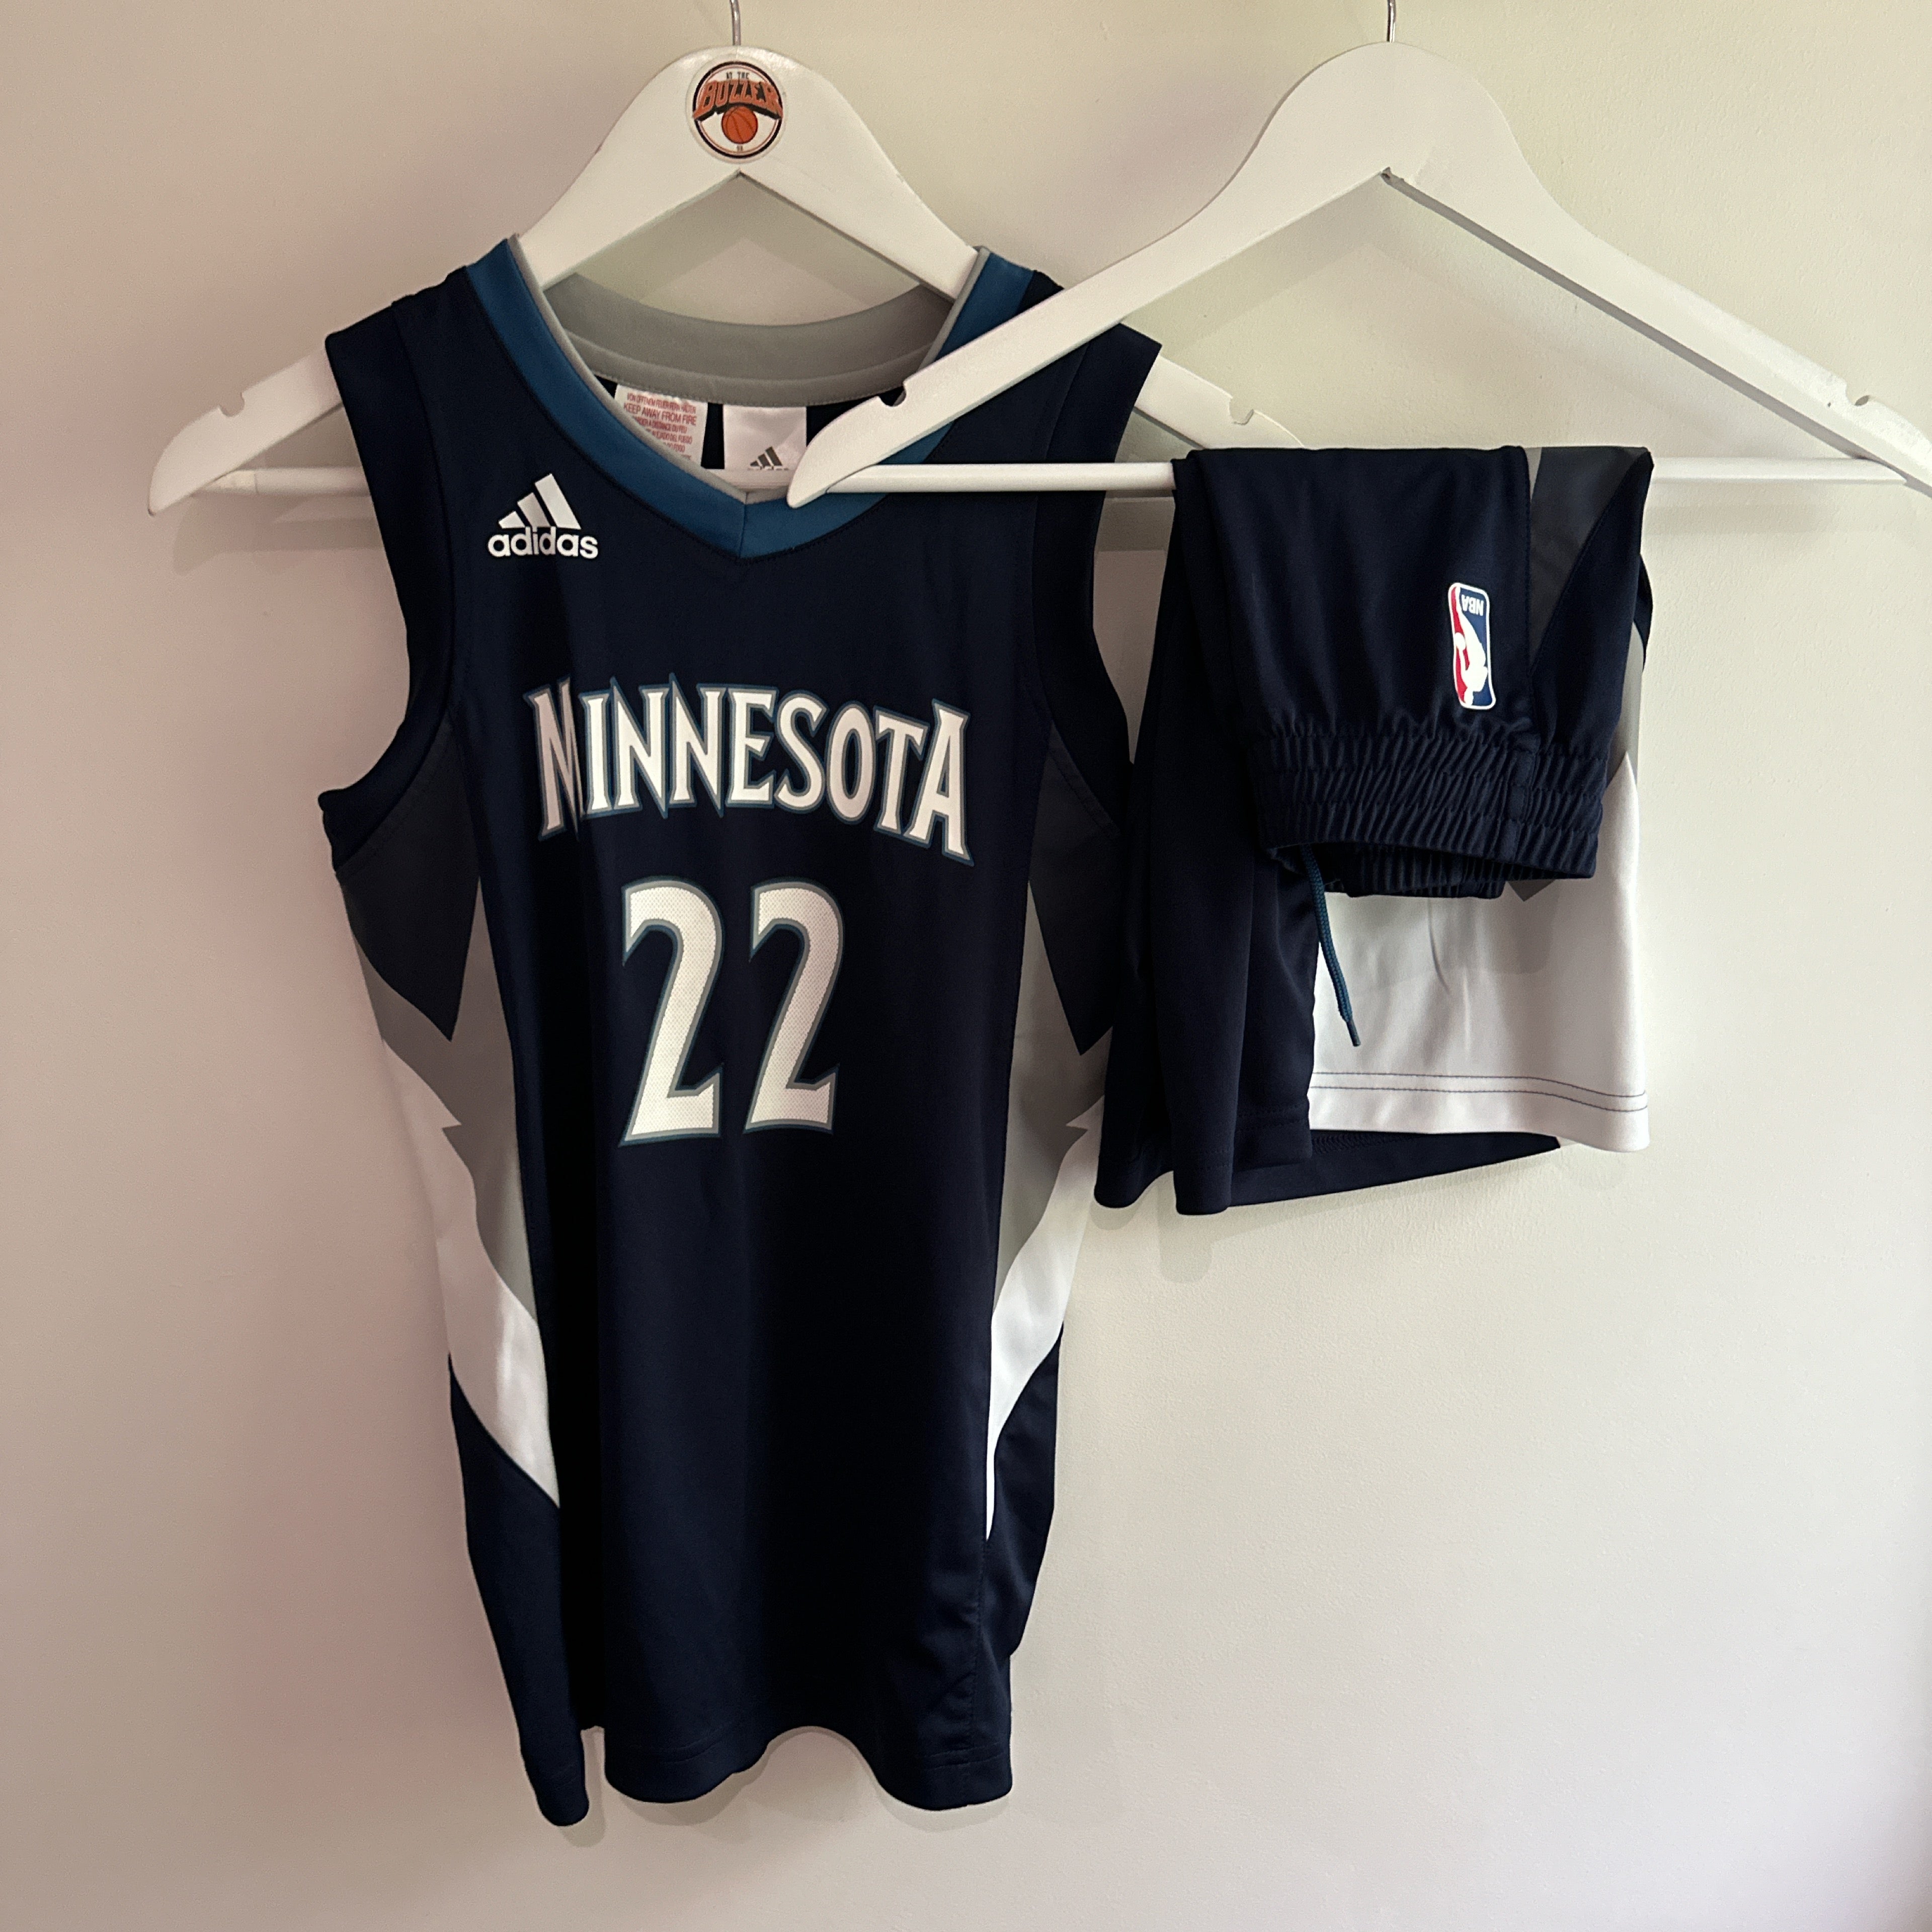 Minnesota Timberwolves Andrew Wiggins jersey & shorts - Youth Small